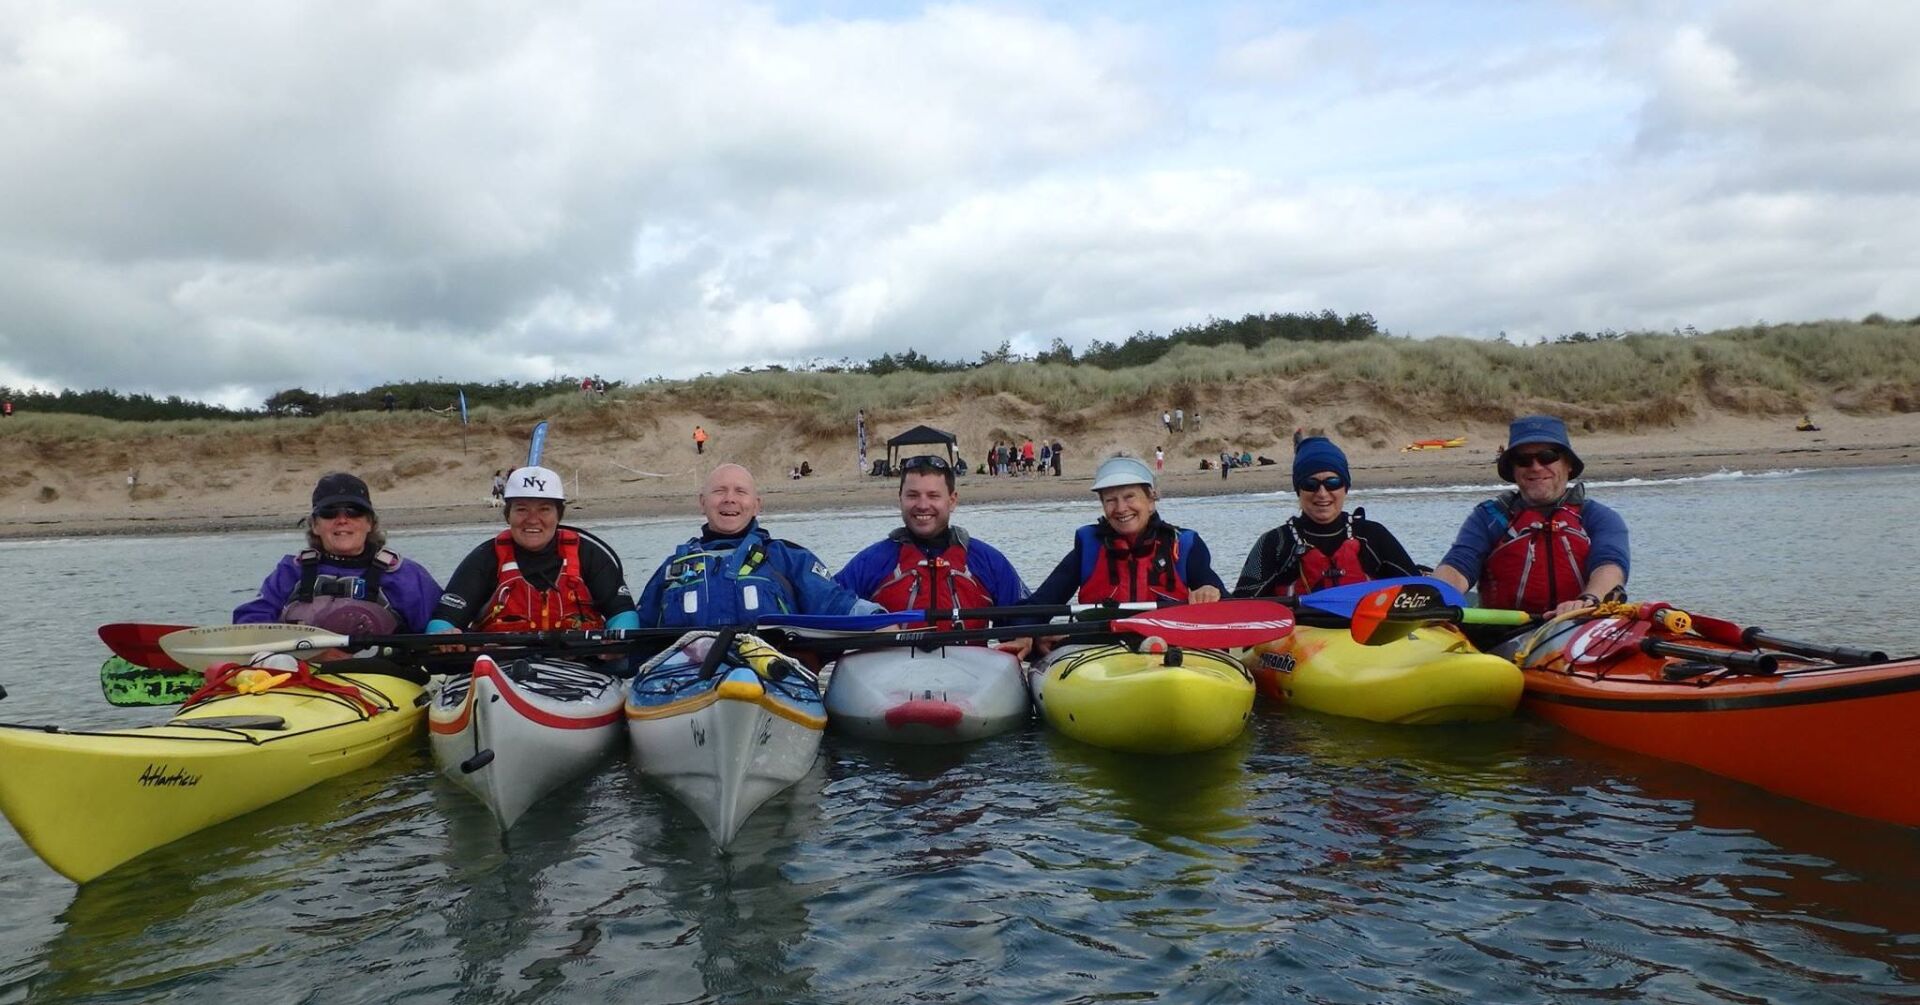 Photo of members of Amlwch Canoe Club in kayaks on the water